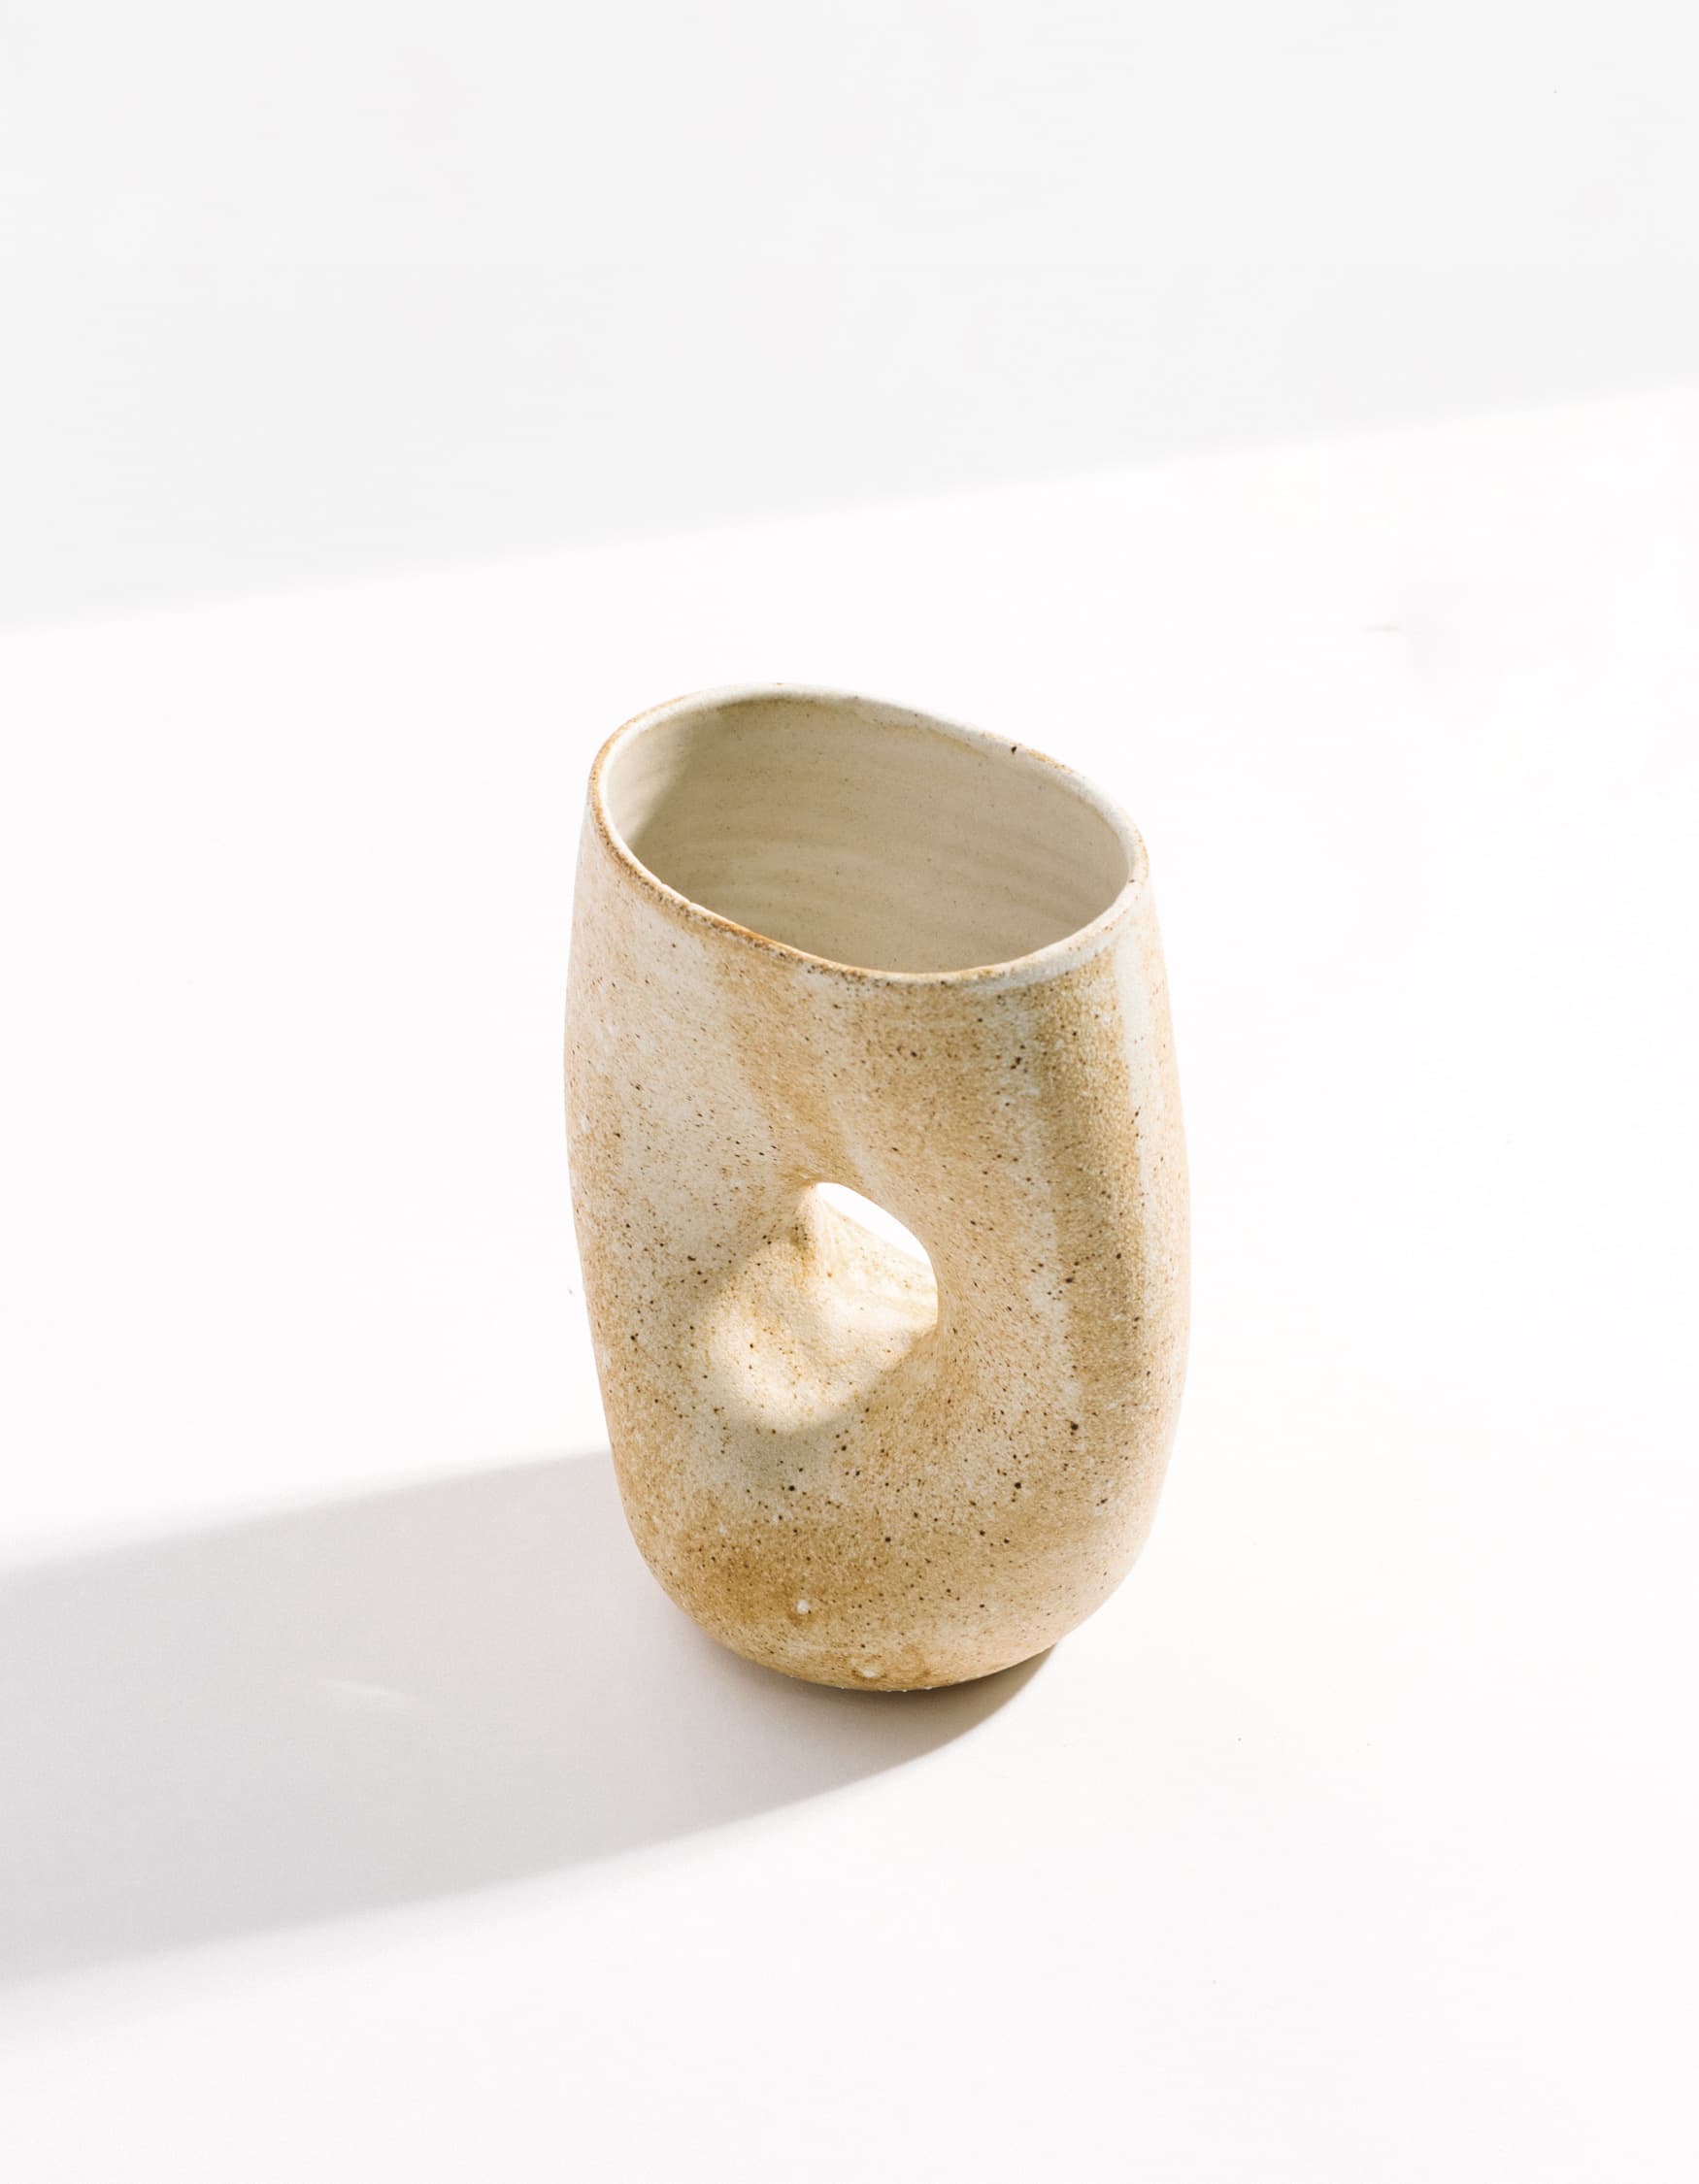 Sandstone Vase No. 4